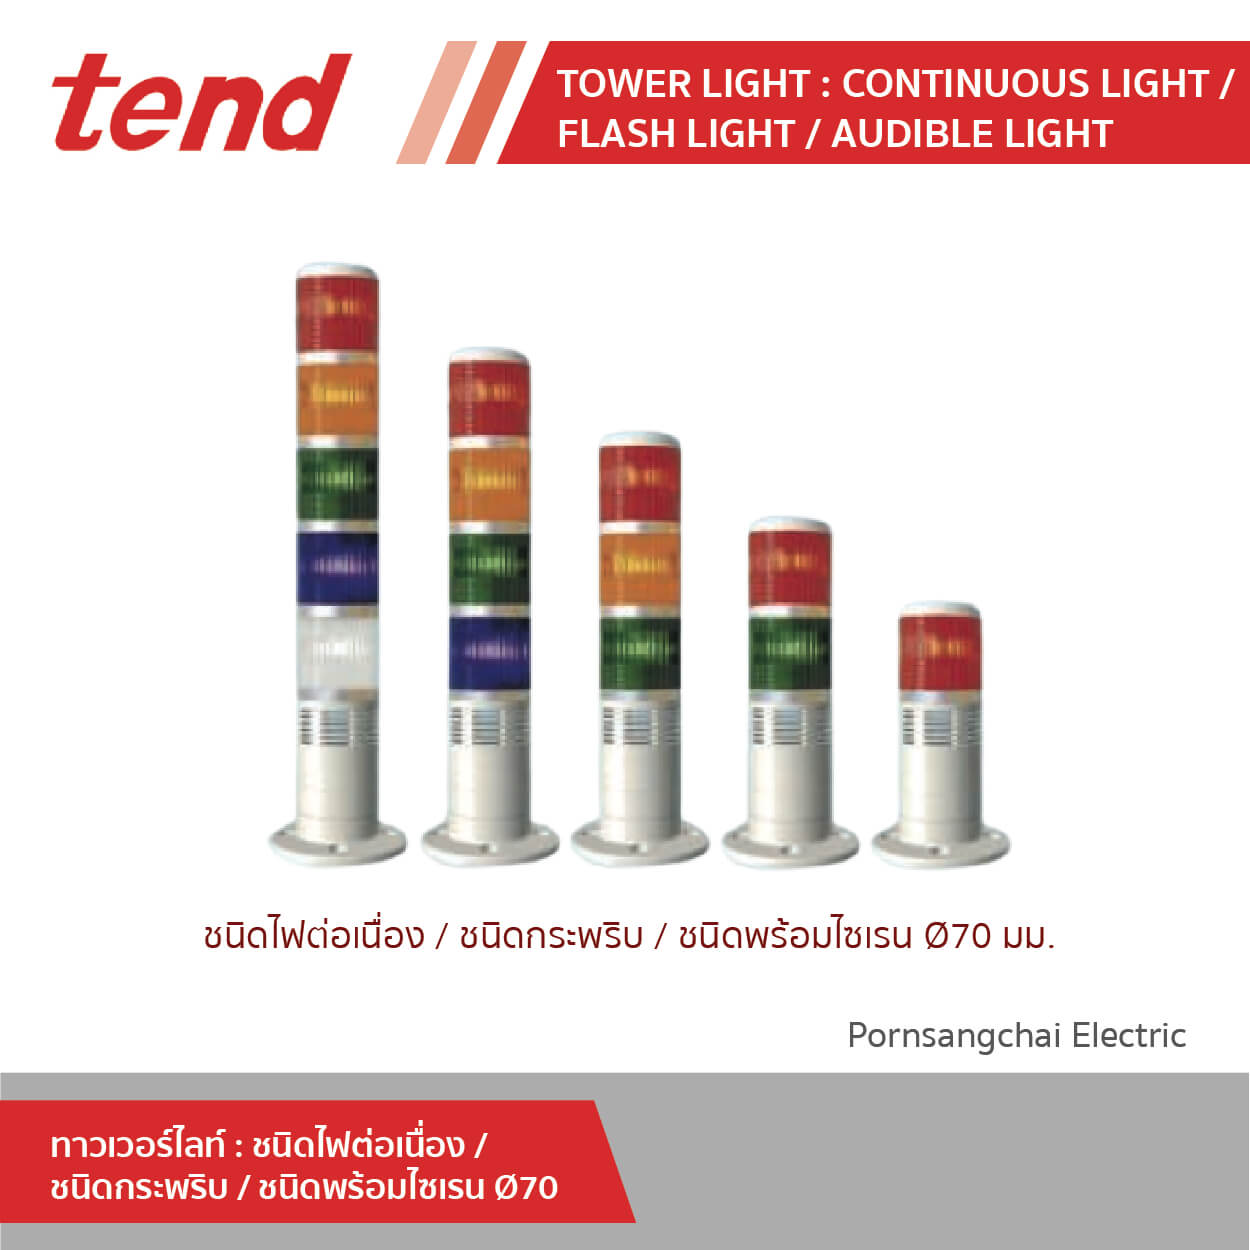 tend Tower Light : Continuous Light / Flash Light / Audible Light